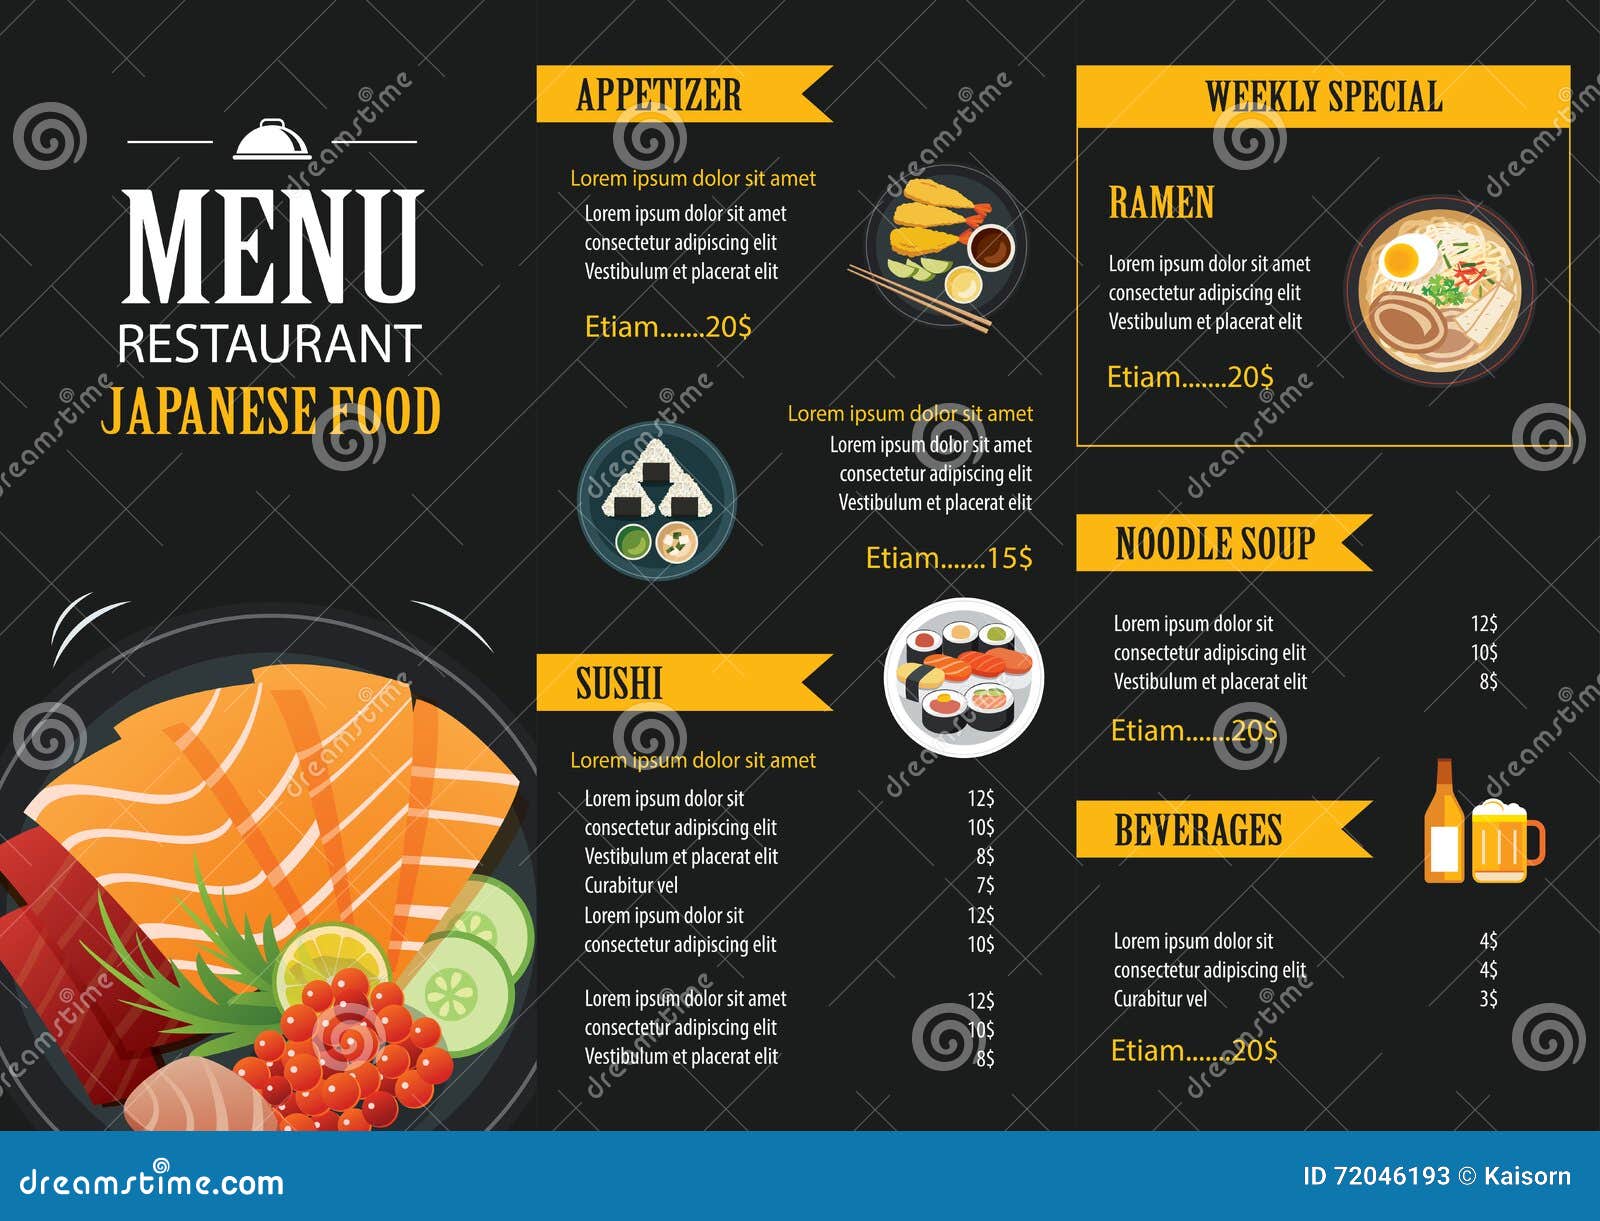 food menu design template